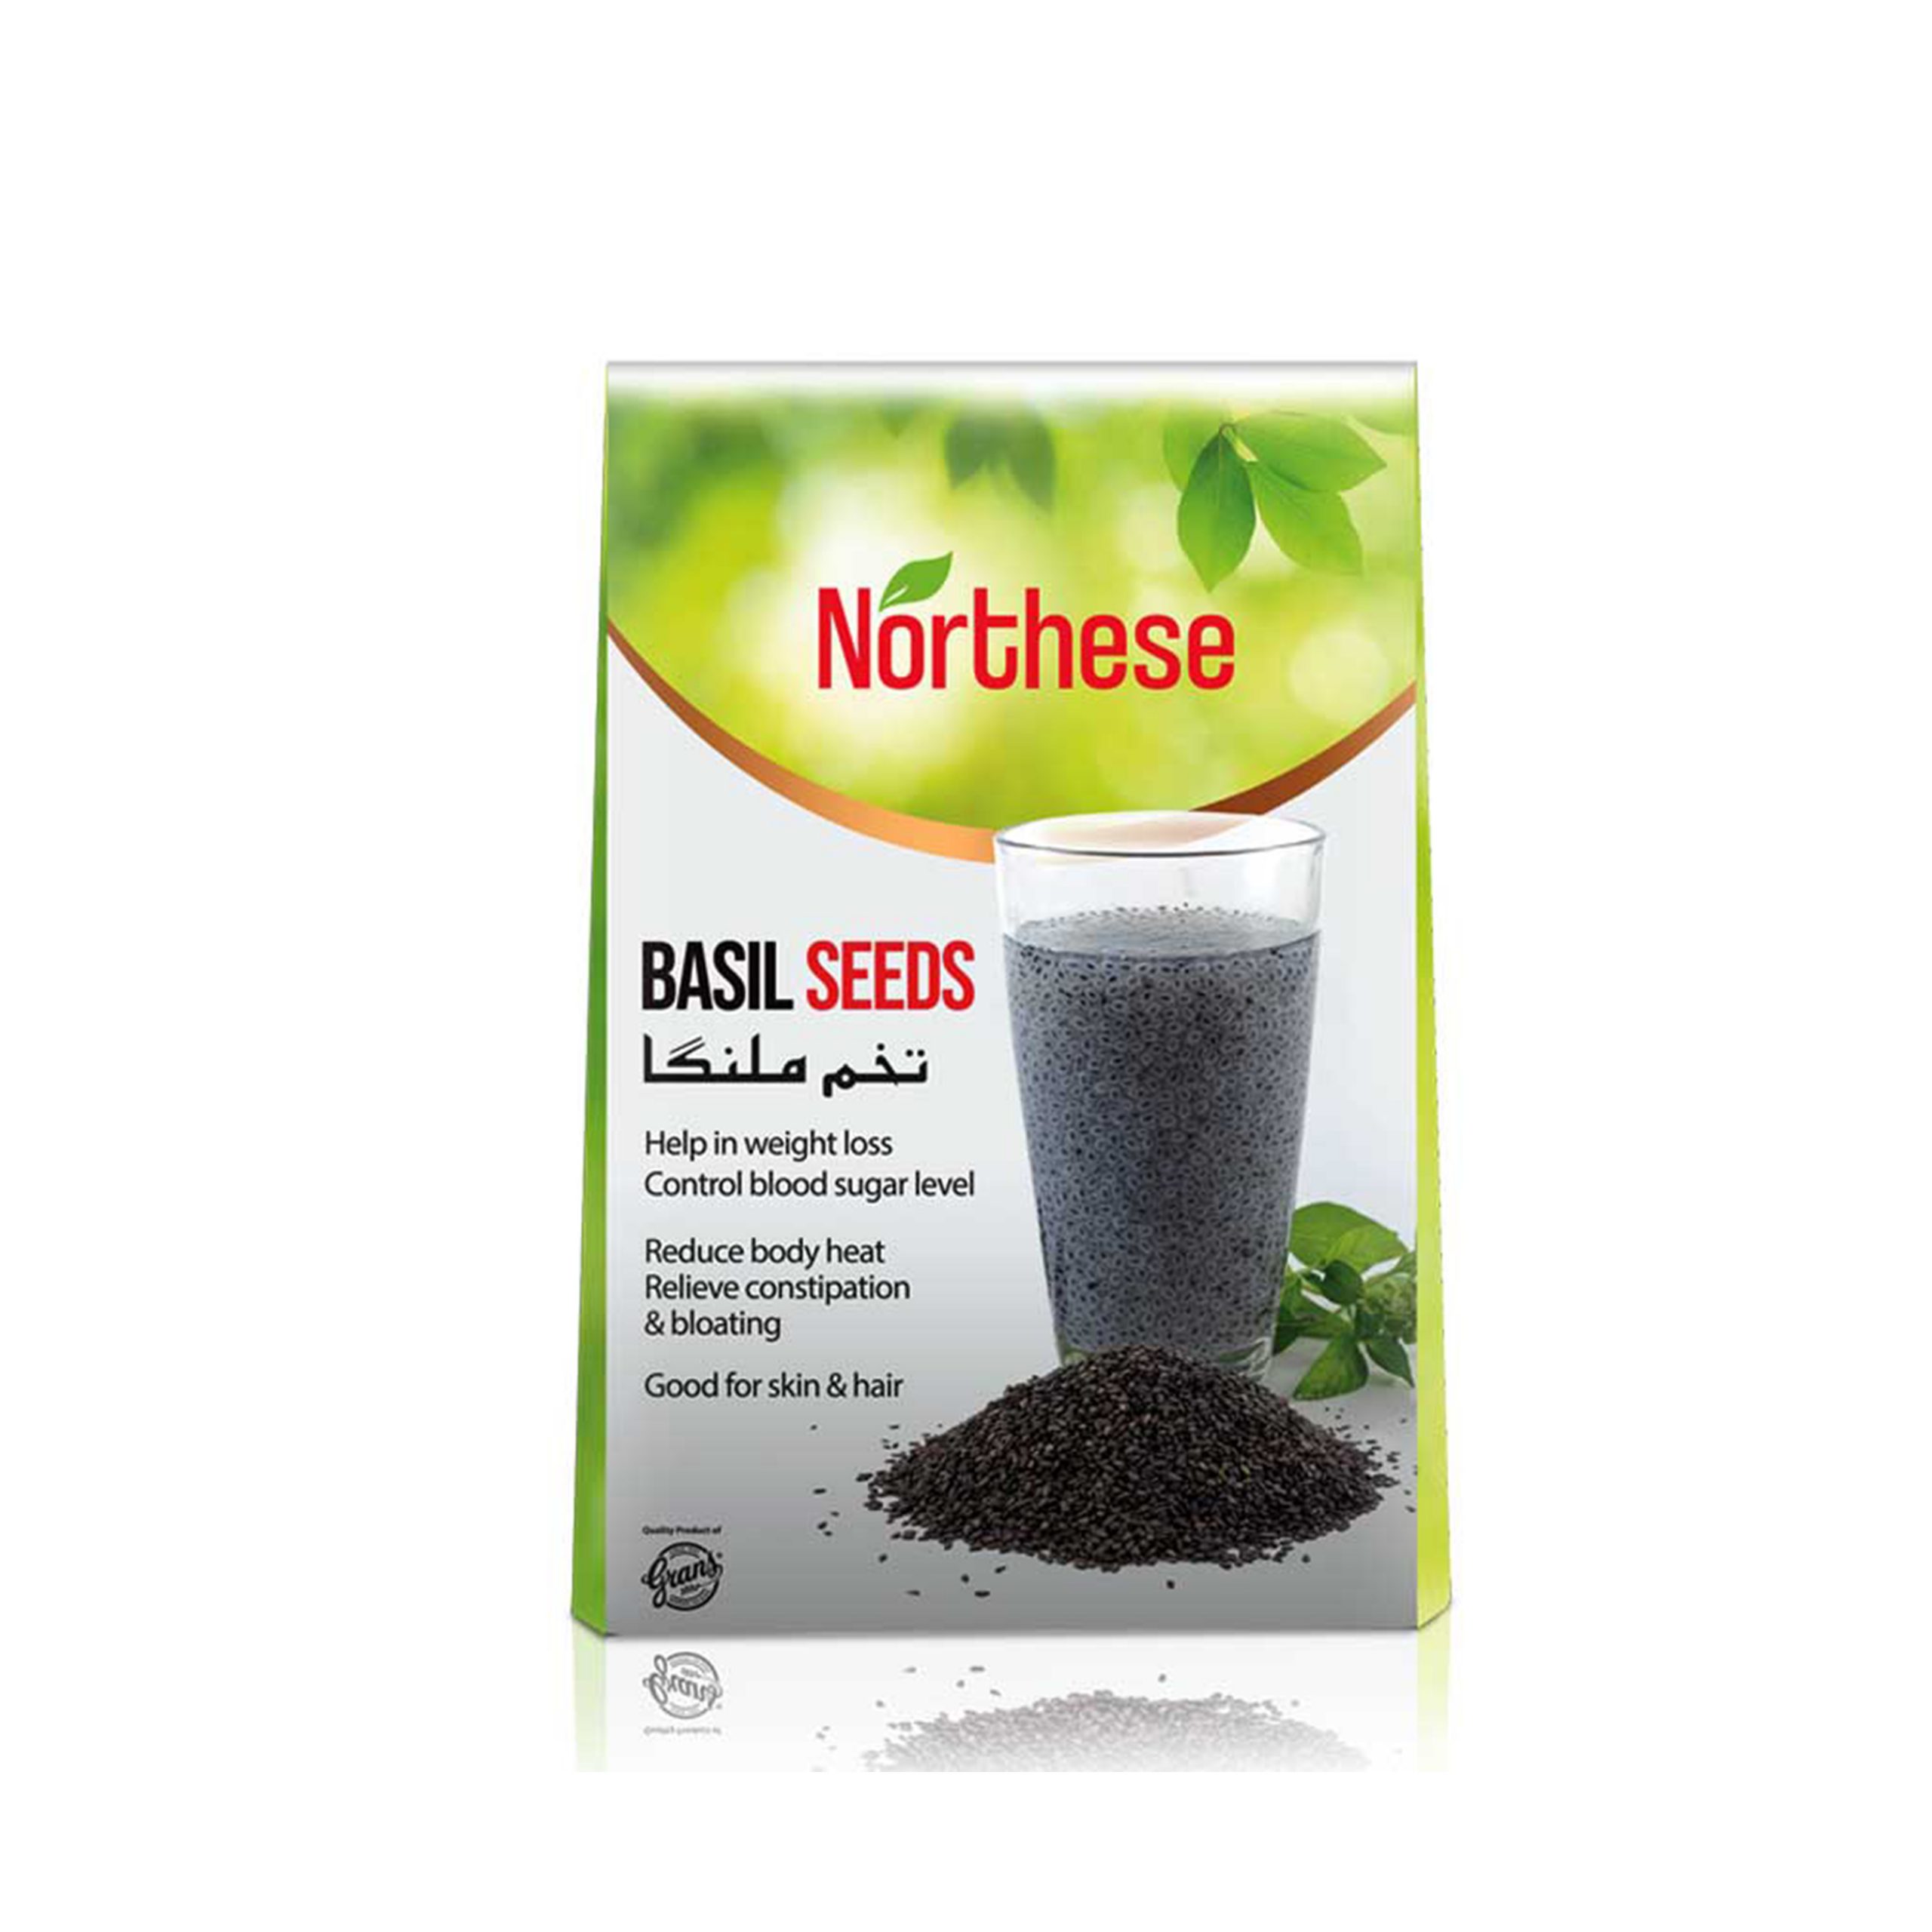 Northease basil seeds